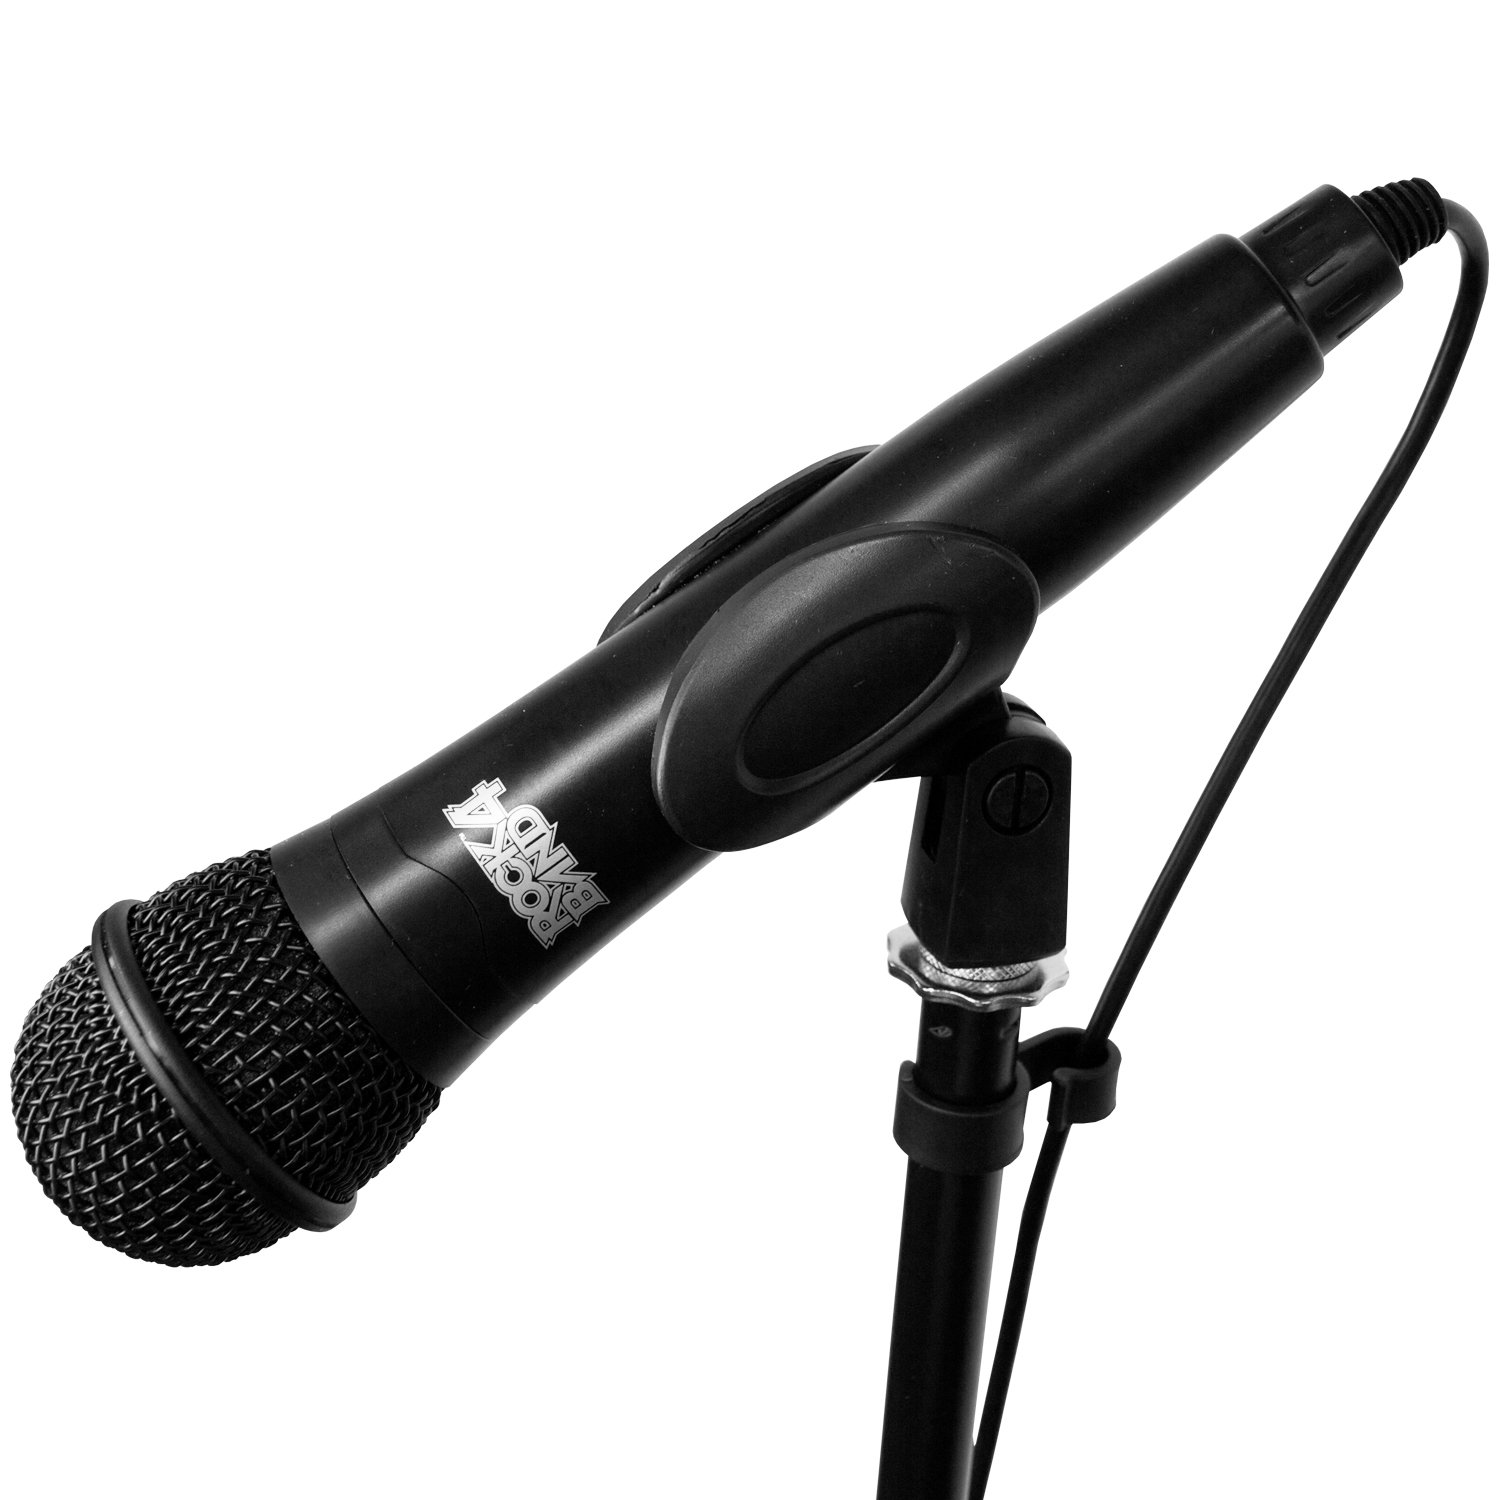 Rock Band 4 USB Microphone